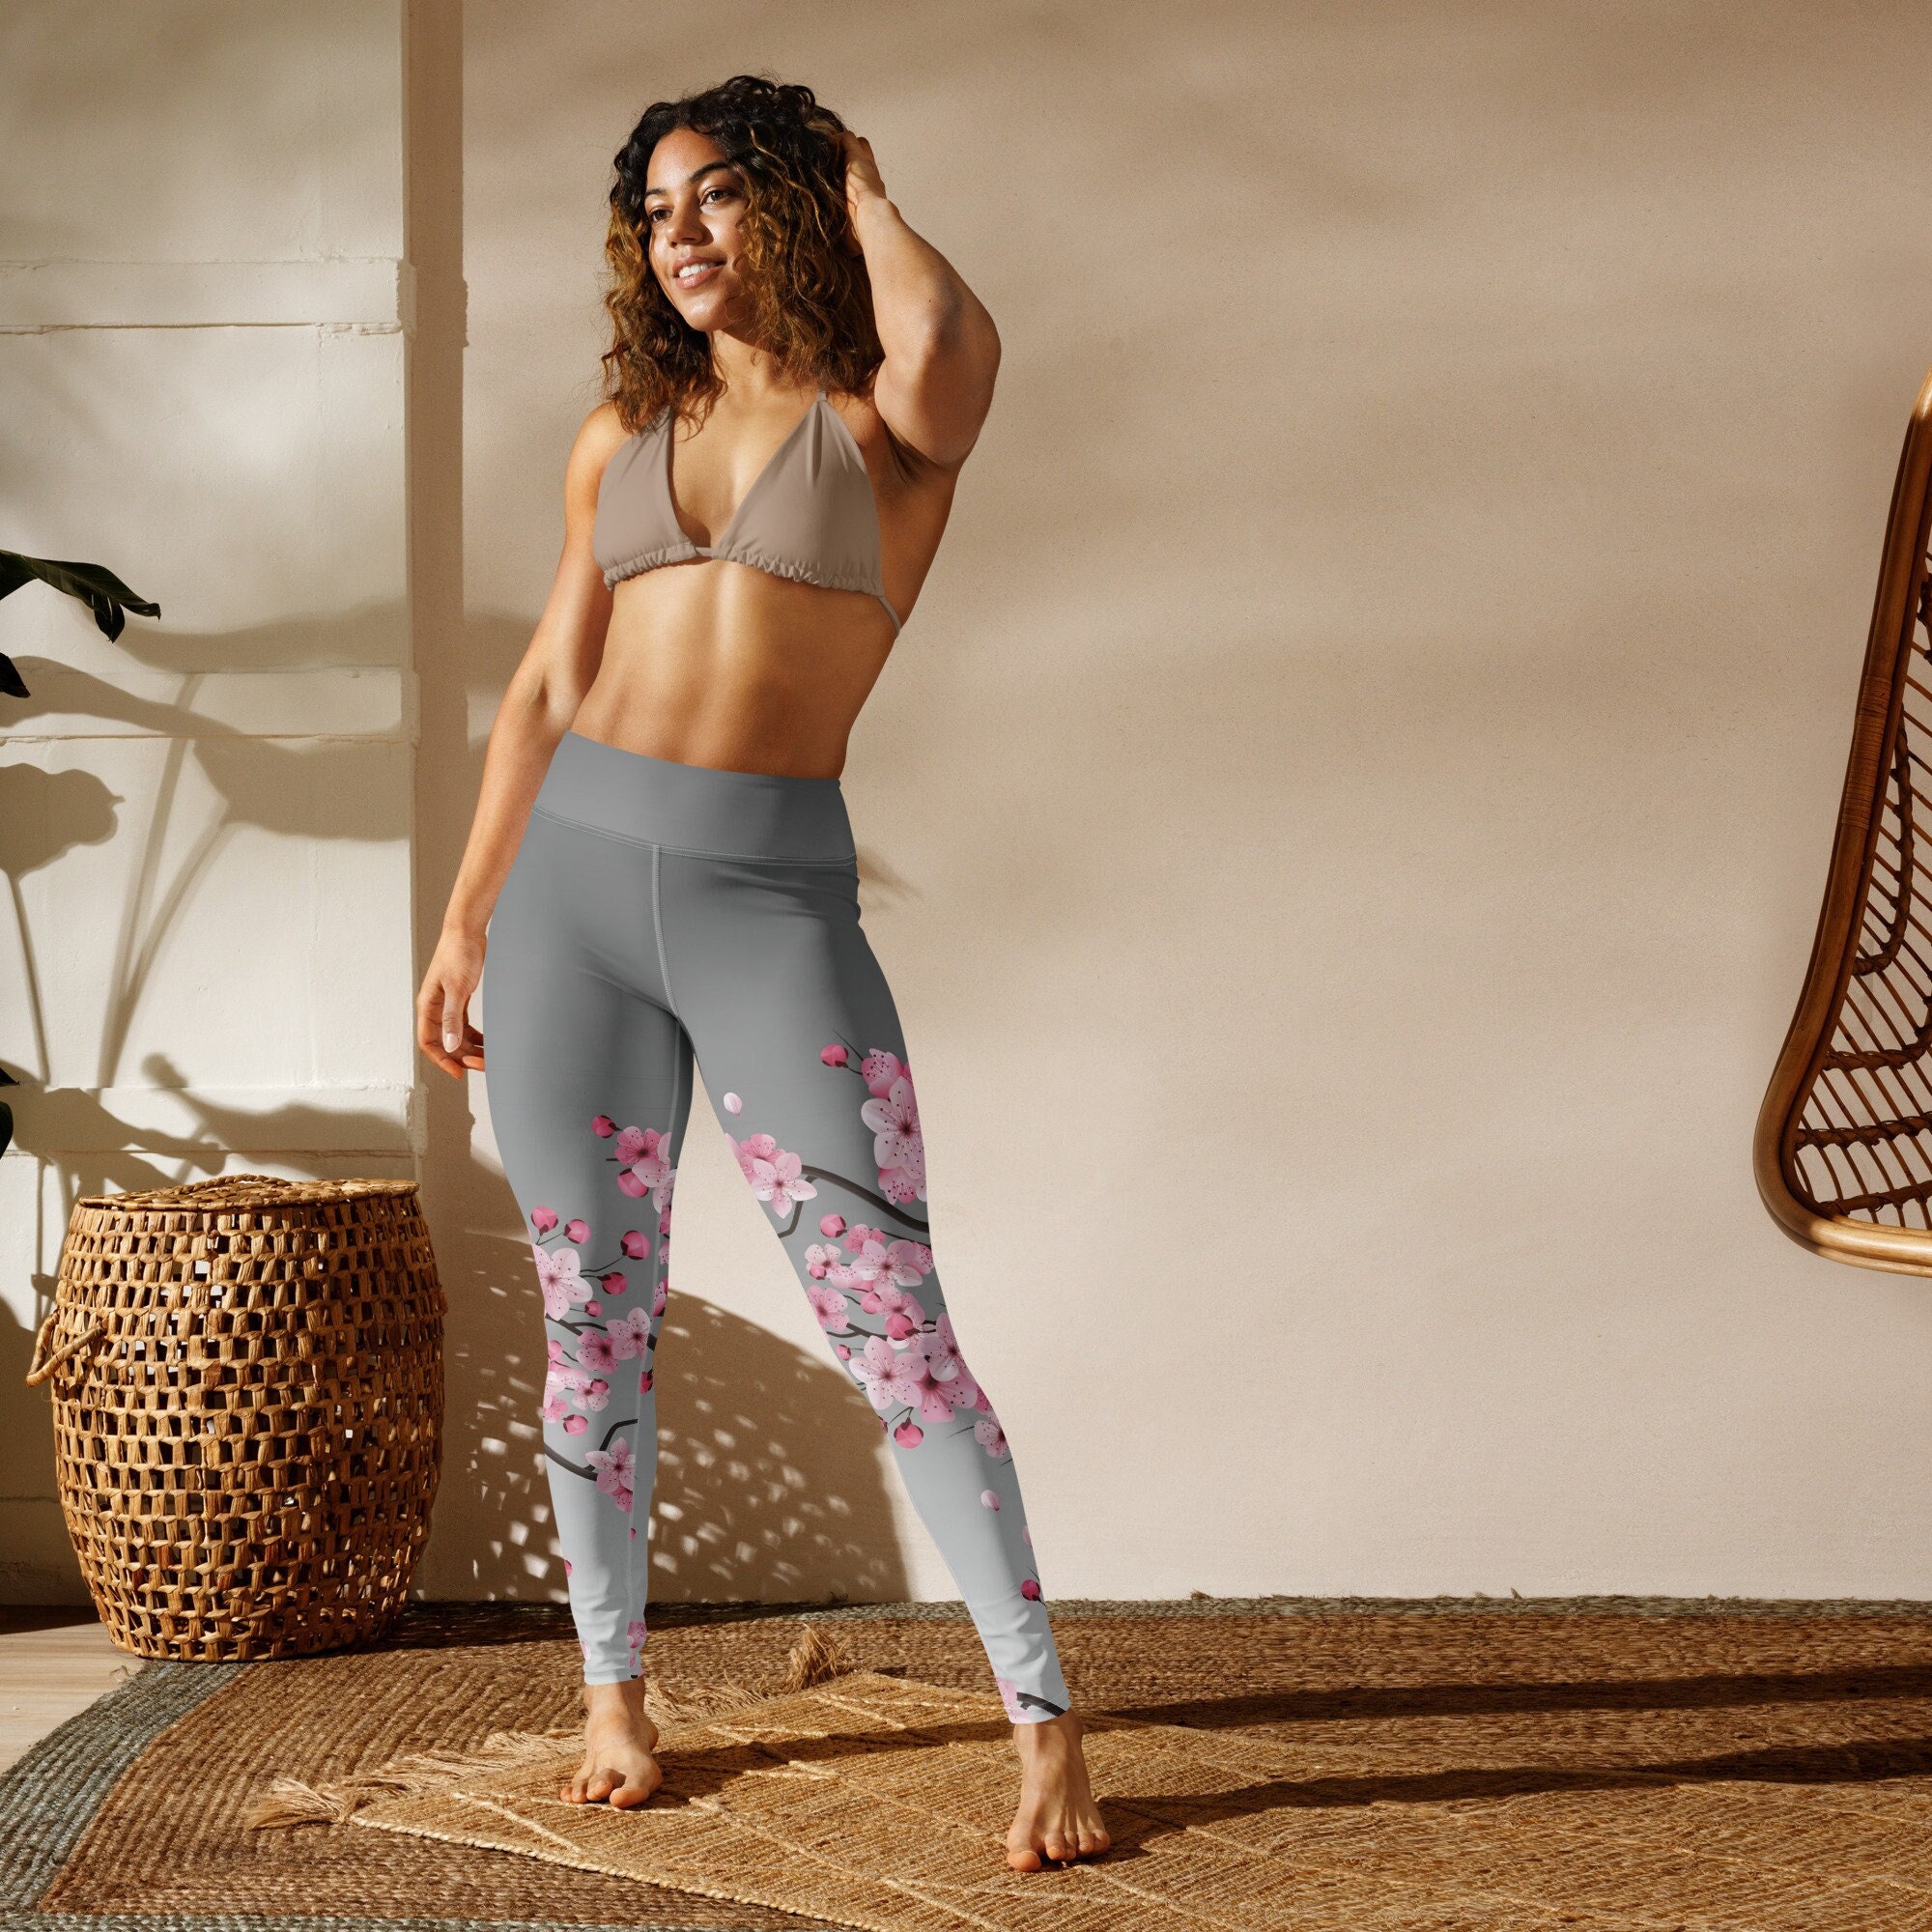 Hemp and Cotton Yoga Pants, Hemp Pants, Eco-friendly Athletic Clothing XS- XXL 